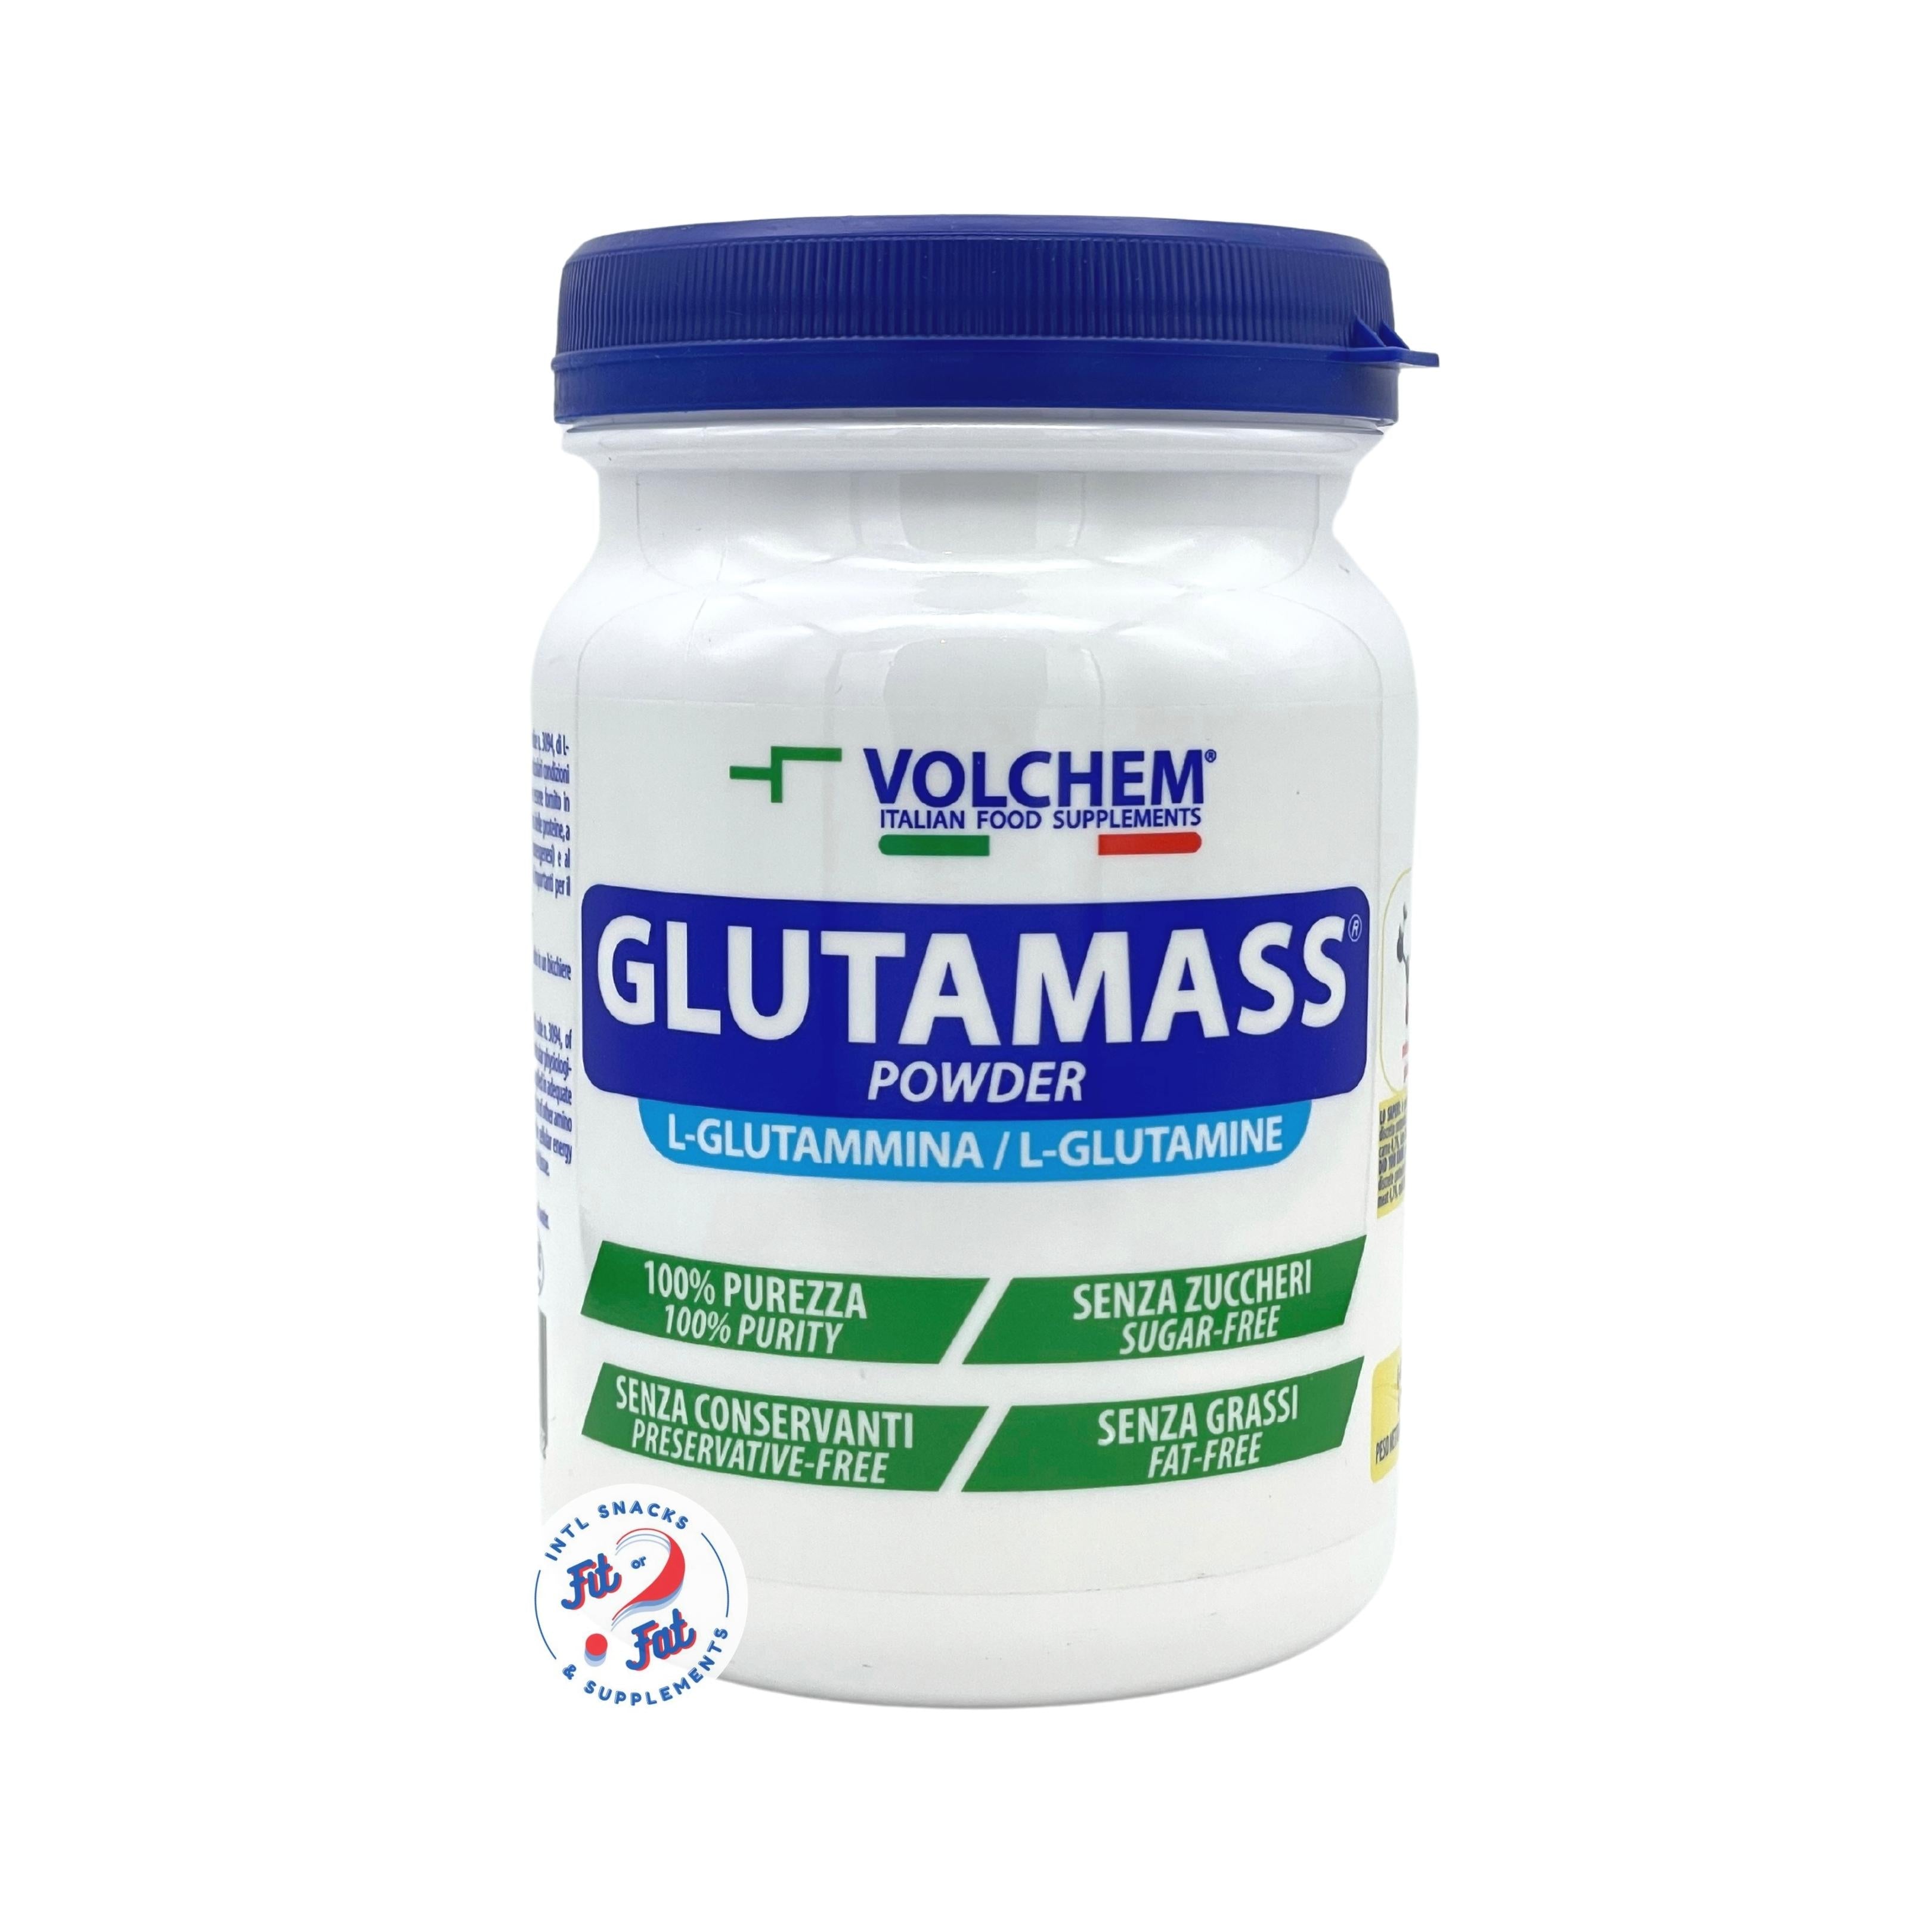 Volchem - Glutamass ( L-glutammina) 300g Polvere